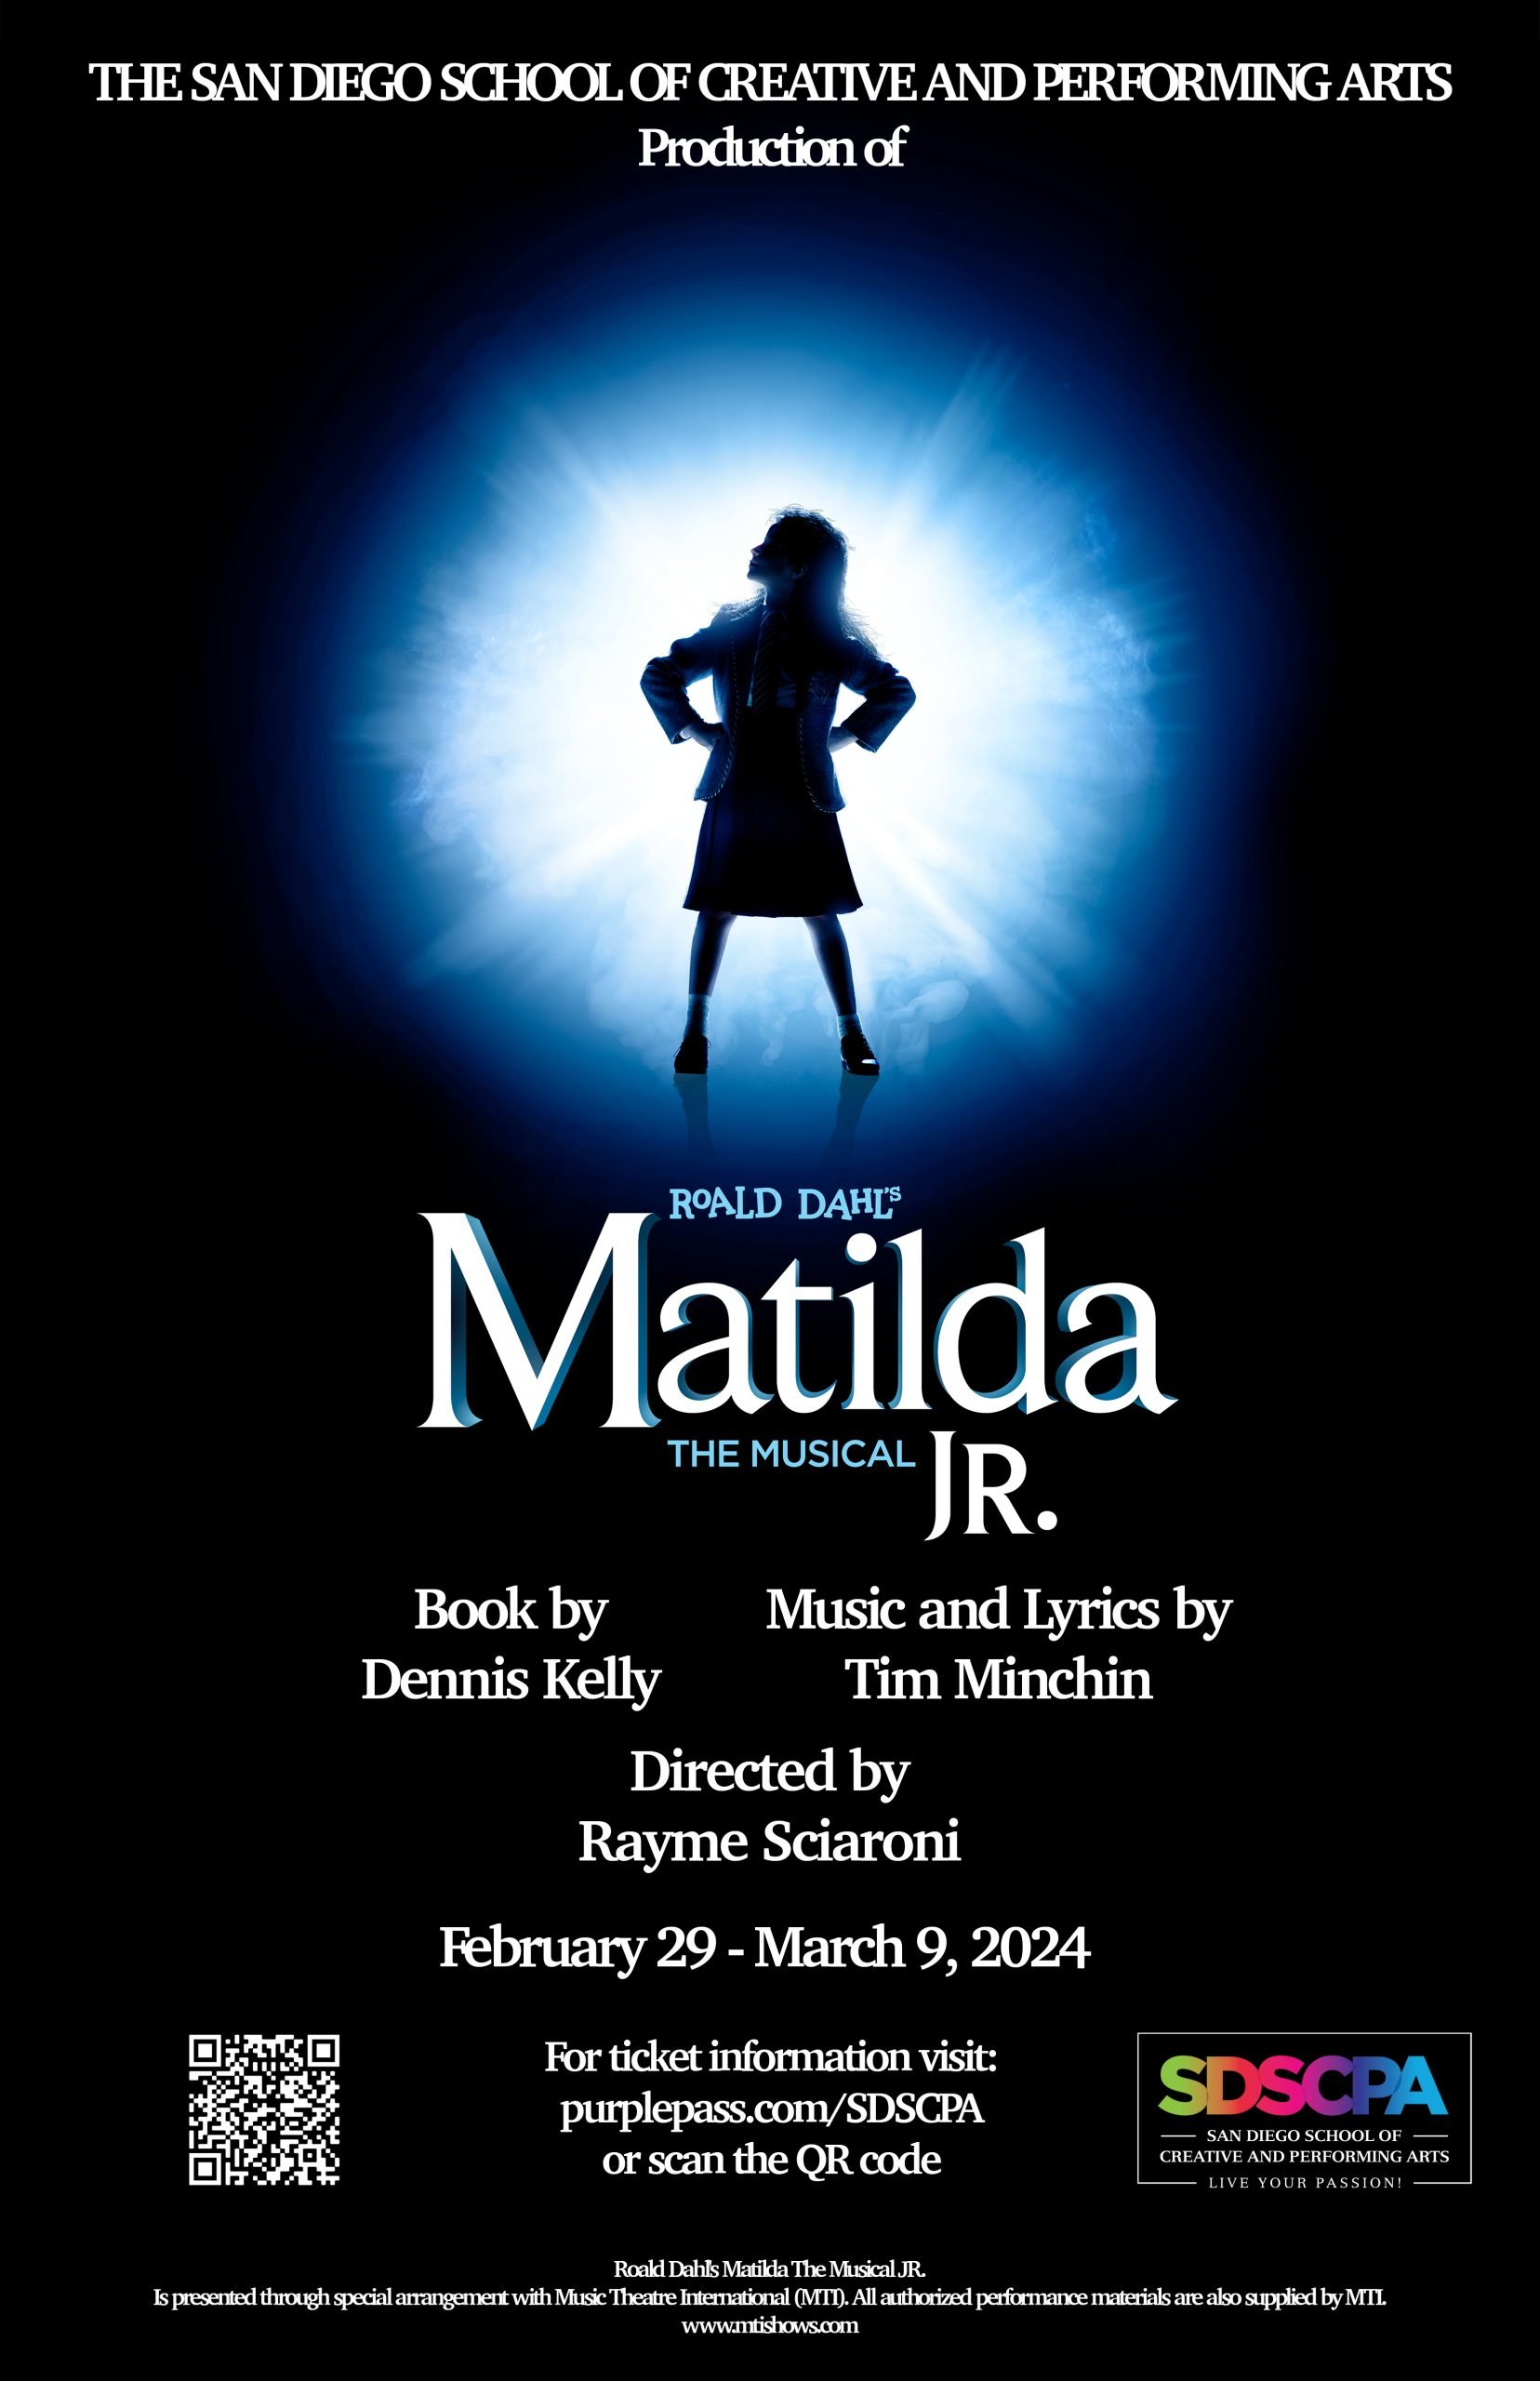 Roald Dahl's Matilda the Musical Jr. - San Diego Magazine